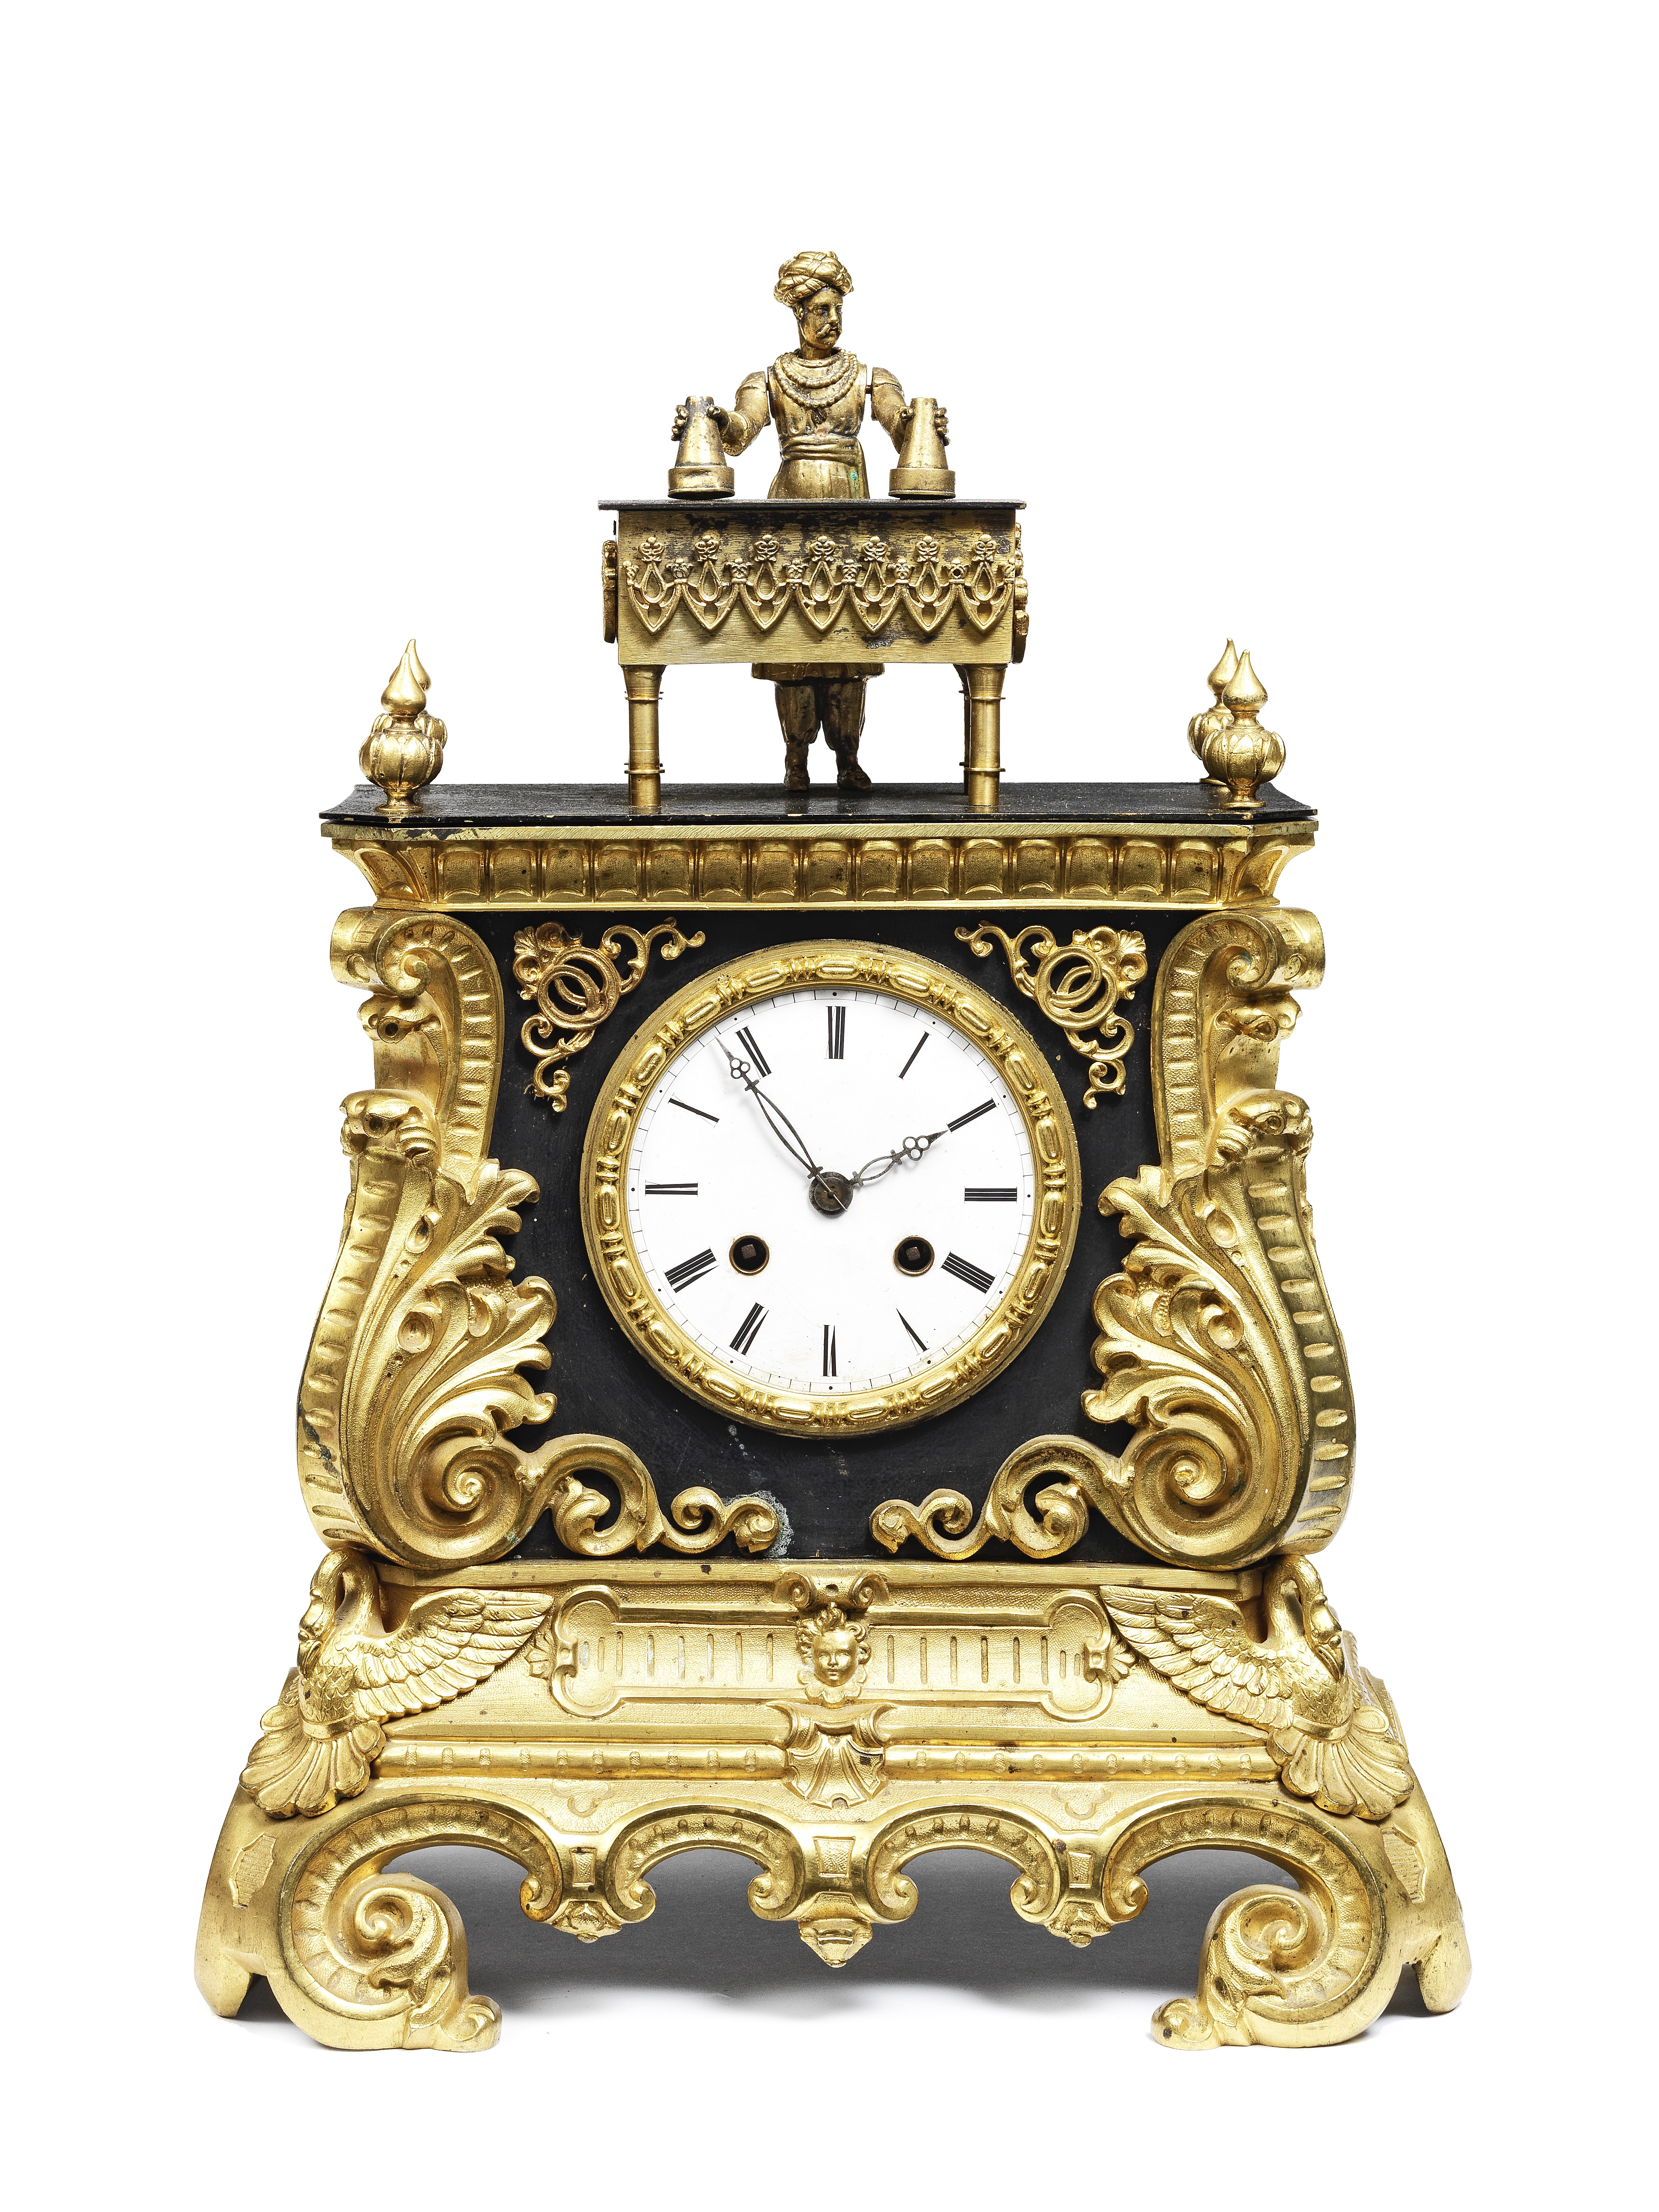 A rare second half of the 19th century automata novelty mystery 'Magician' mantel clock The cloc...